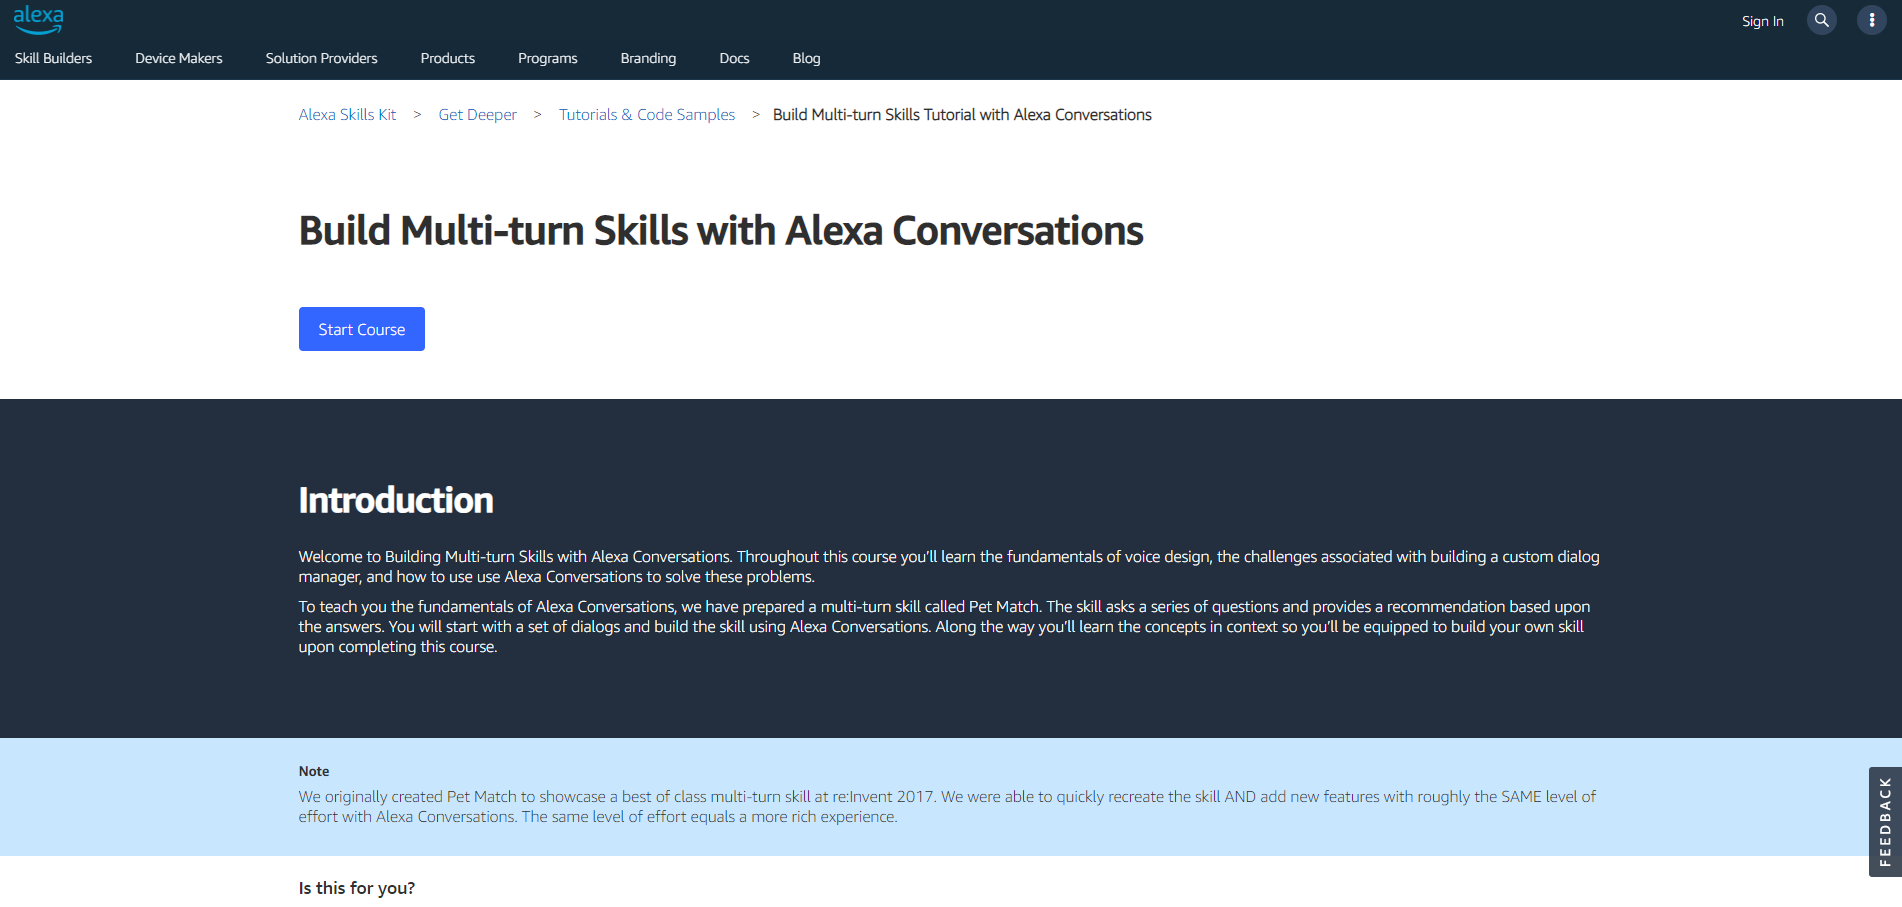 Build Multi-turn Skills with Alexa Conversations - Tutorials